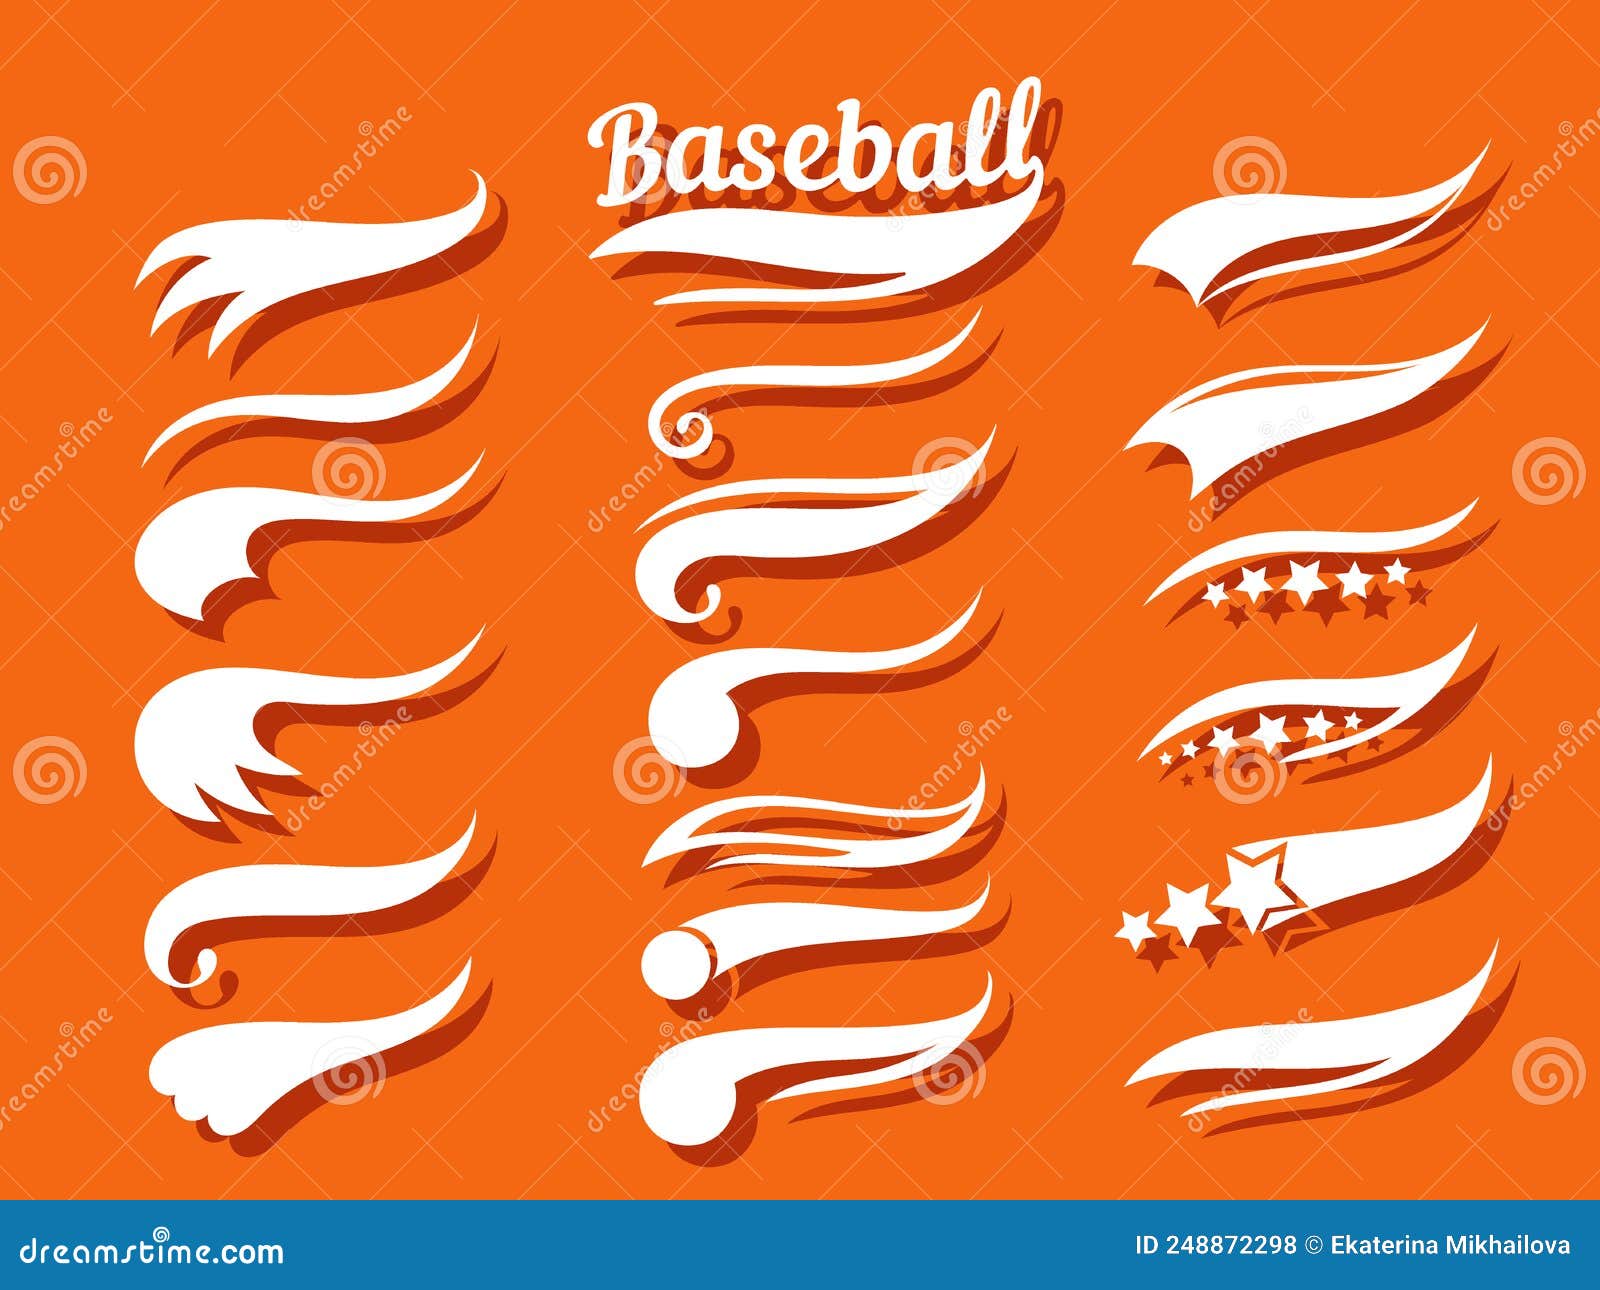 Swooshes Text Tails for Baseball Design. Sports Swash Underline